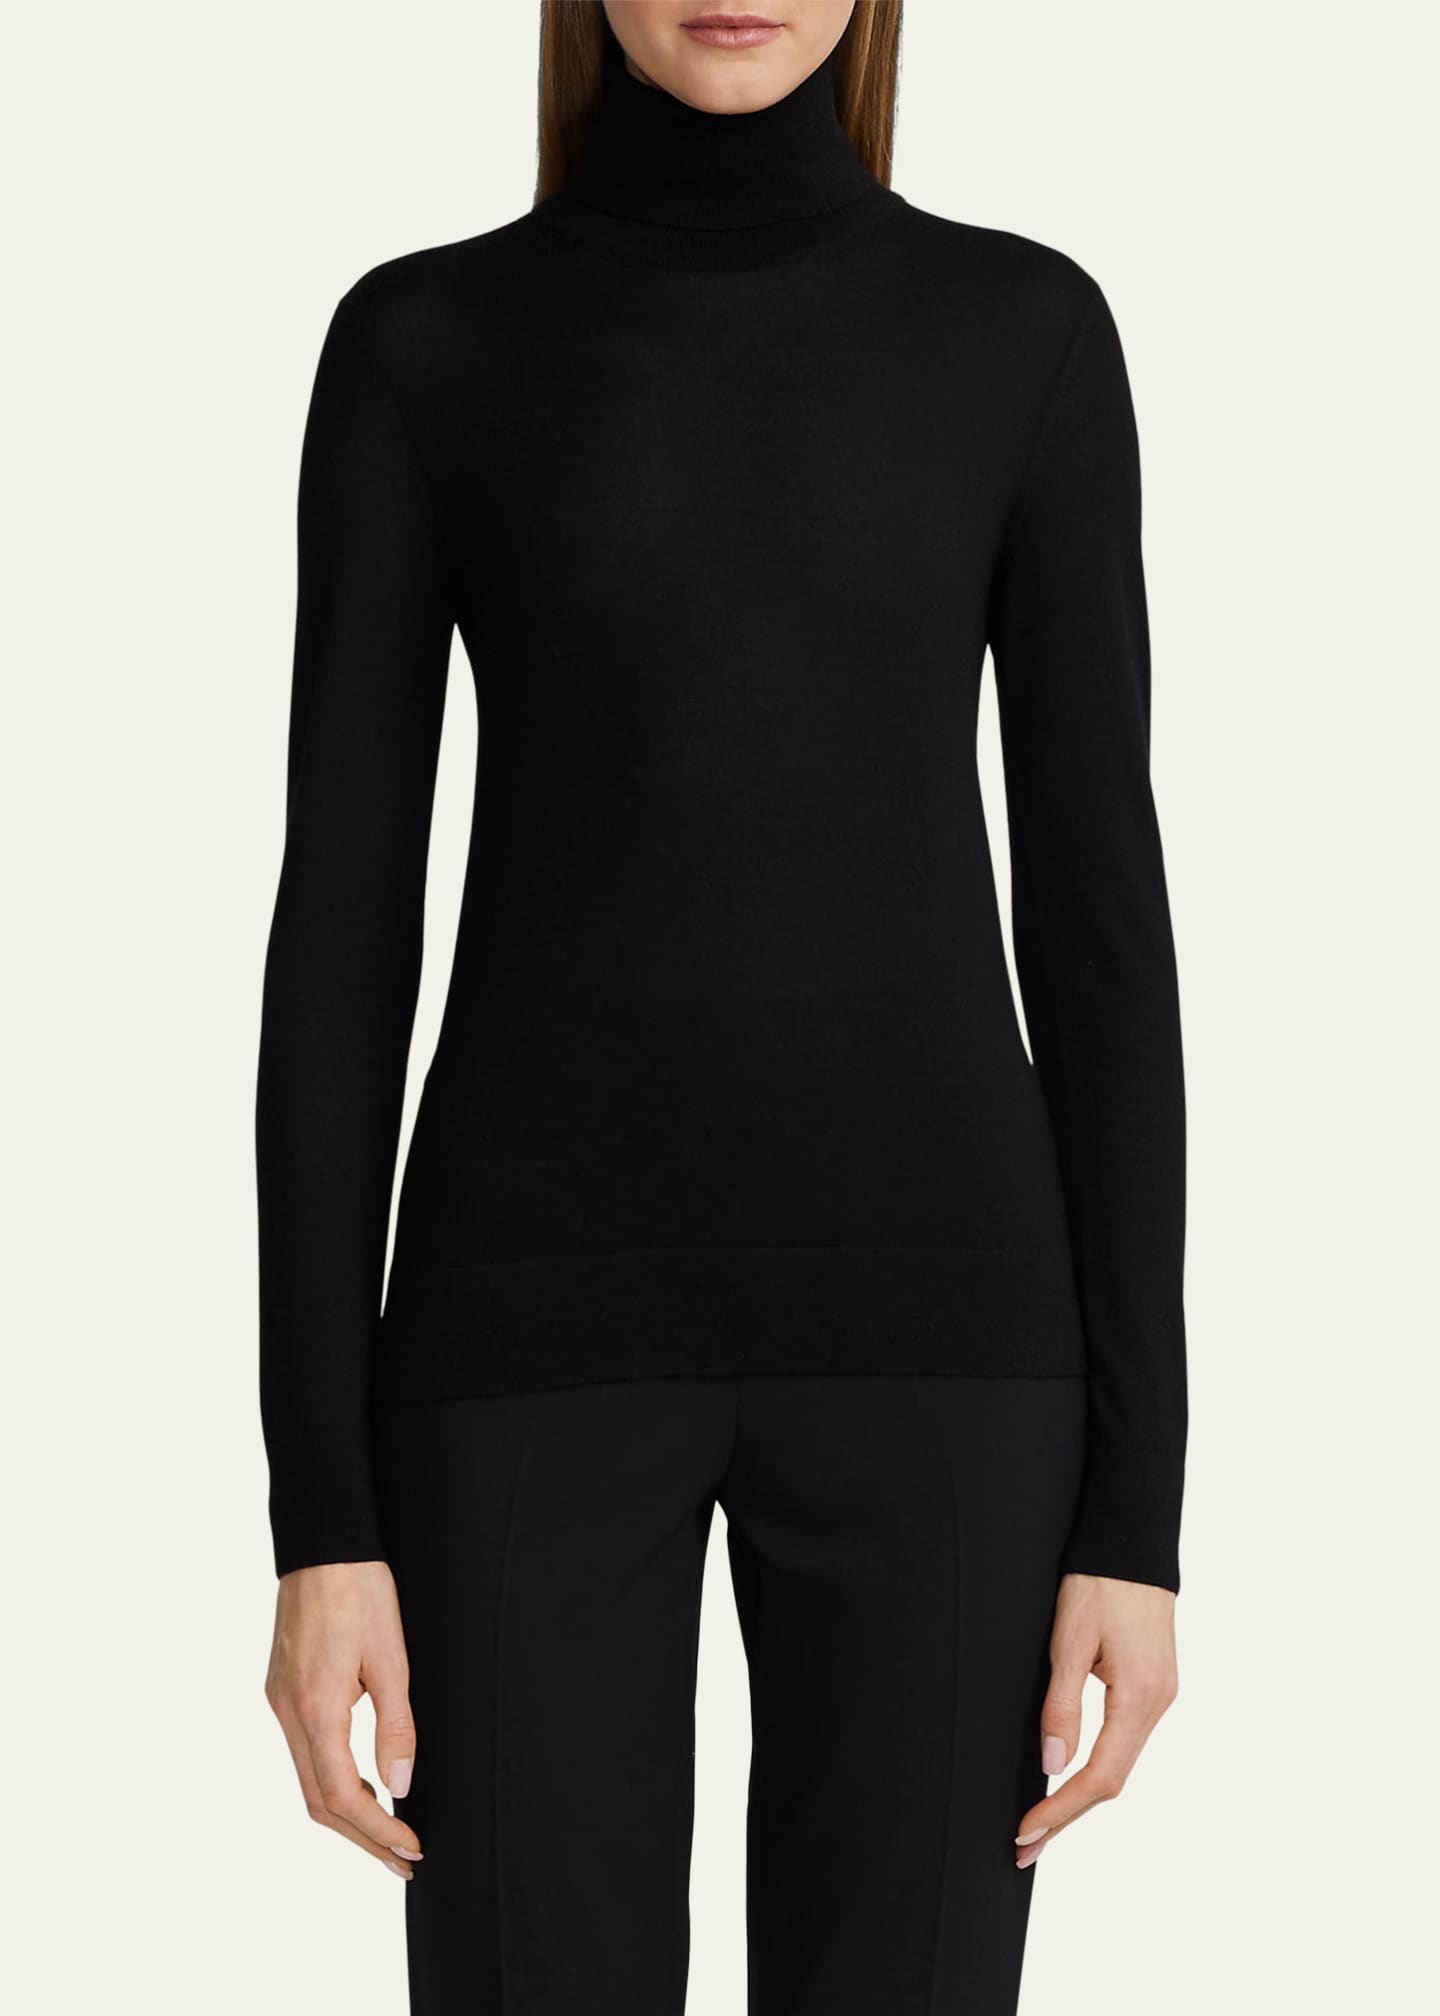 Ralph Lauren Collection Long-Sleeve Cashmere Turtleneck Sweater